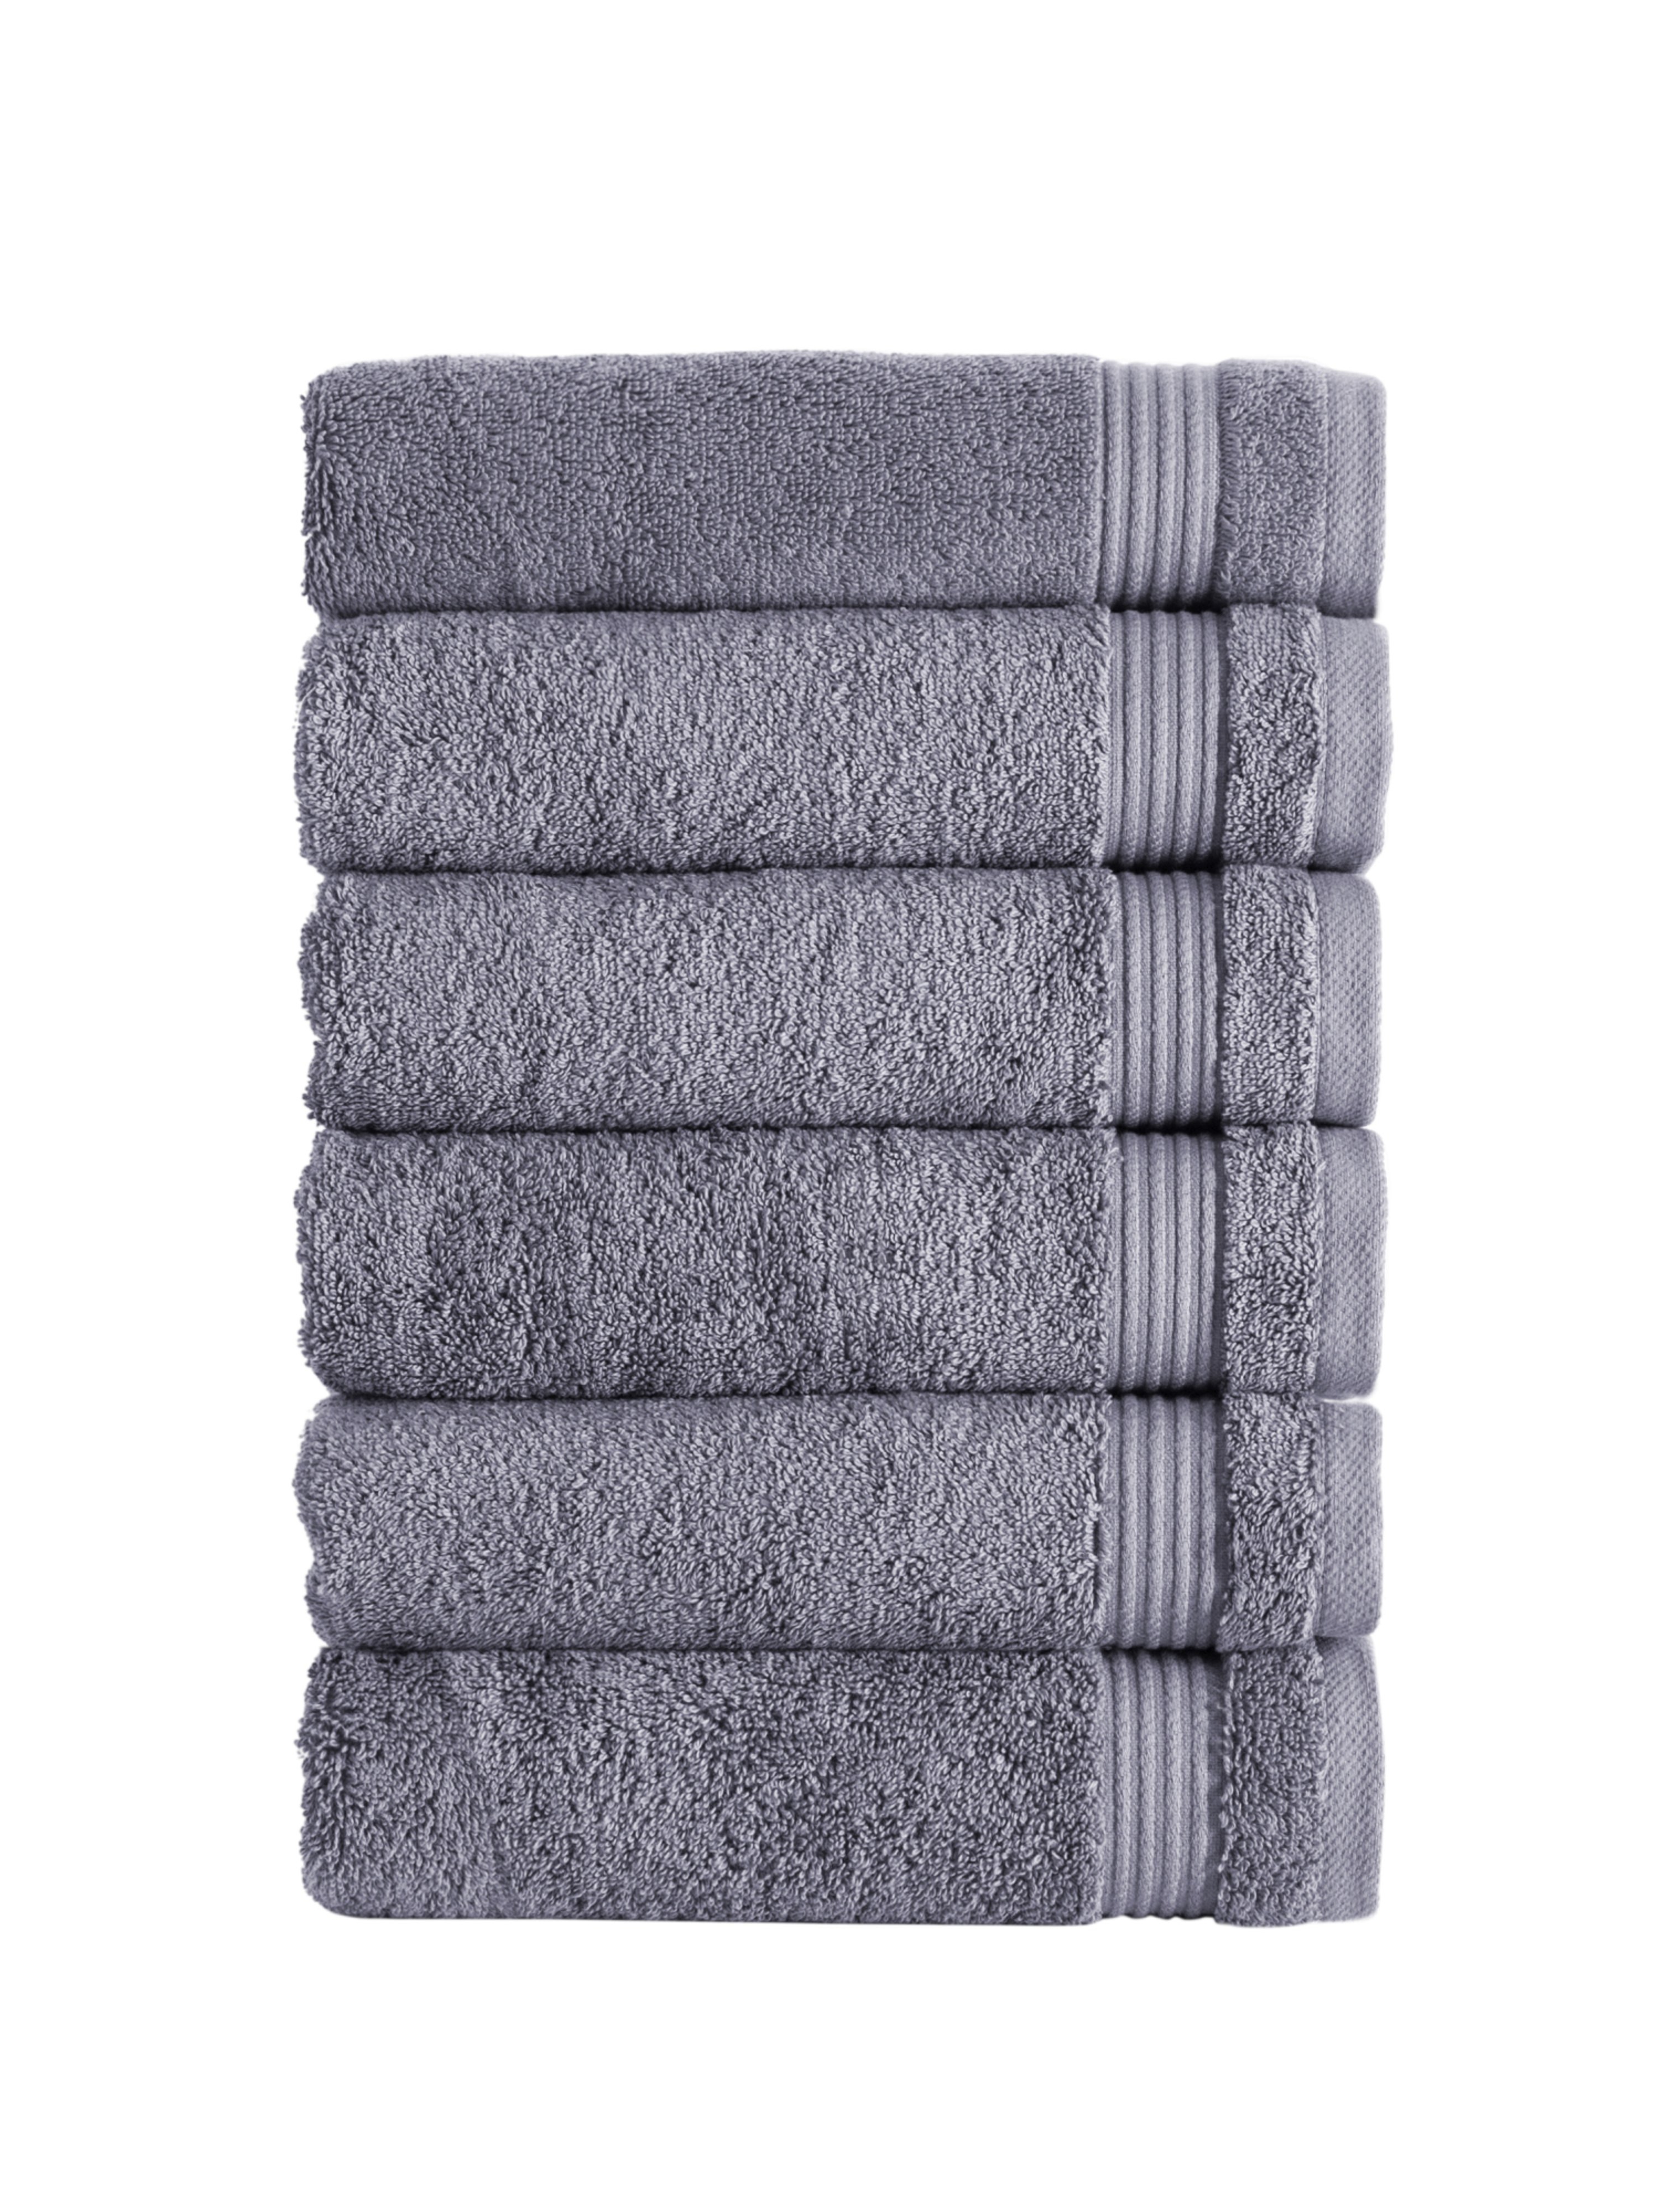 Classic Turkish Towels Amadeus Hand Towel 16x27 In Grey